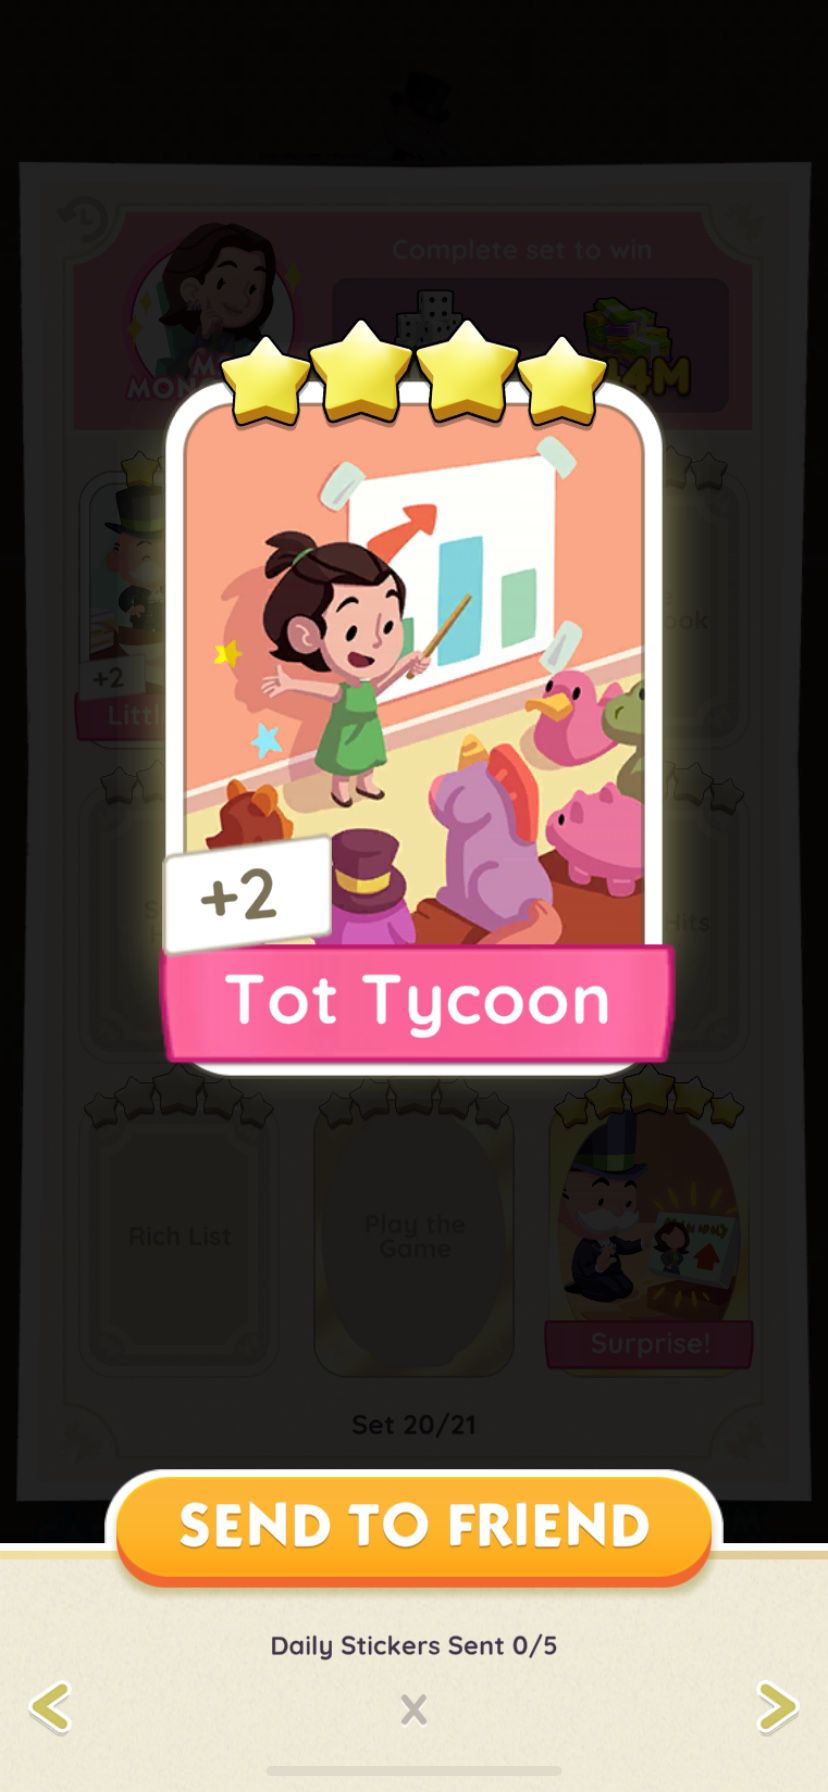 Monopoly go 4-star Sticker (Tot tycoon)